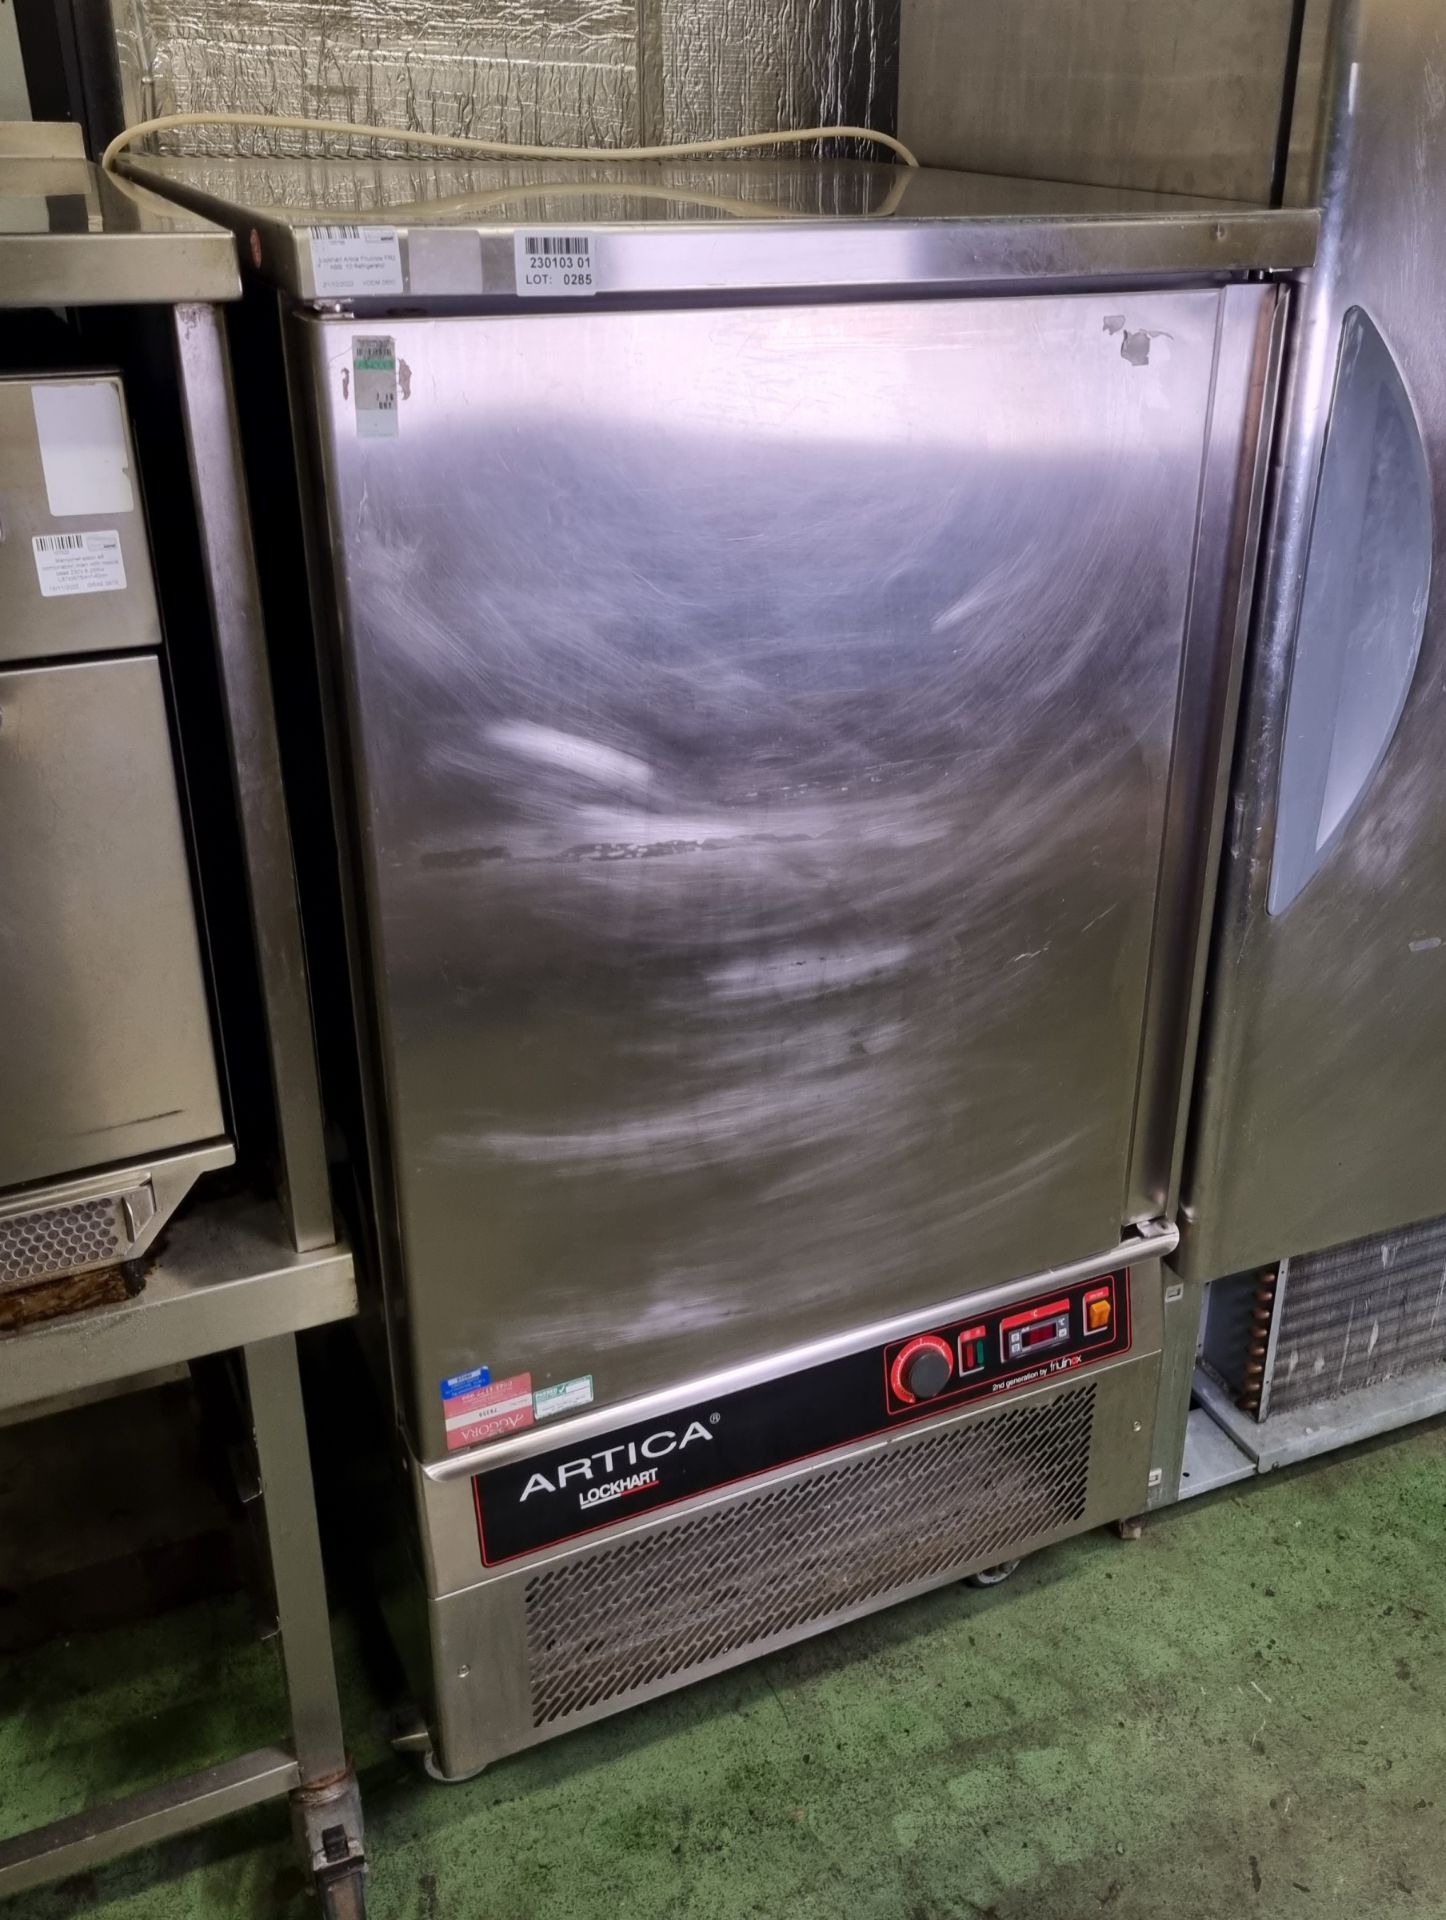 Lockhart Artica Friulinox FR2 ABB. 10 Refrigerator - Image 2 of 4